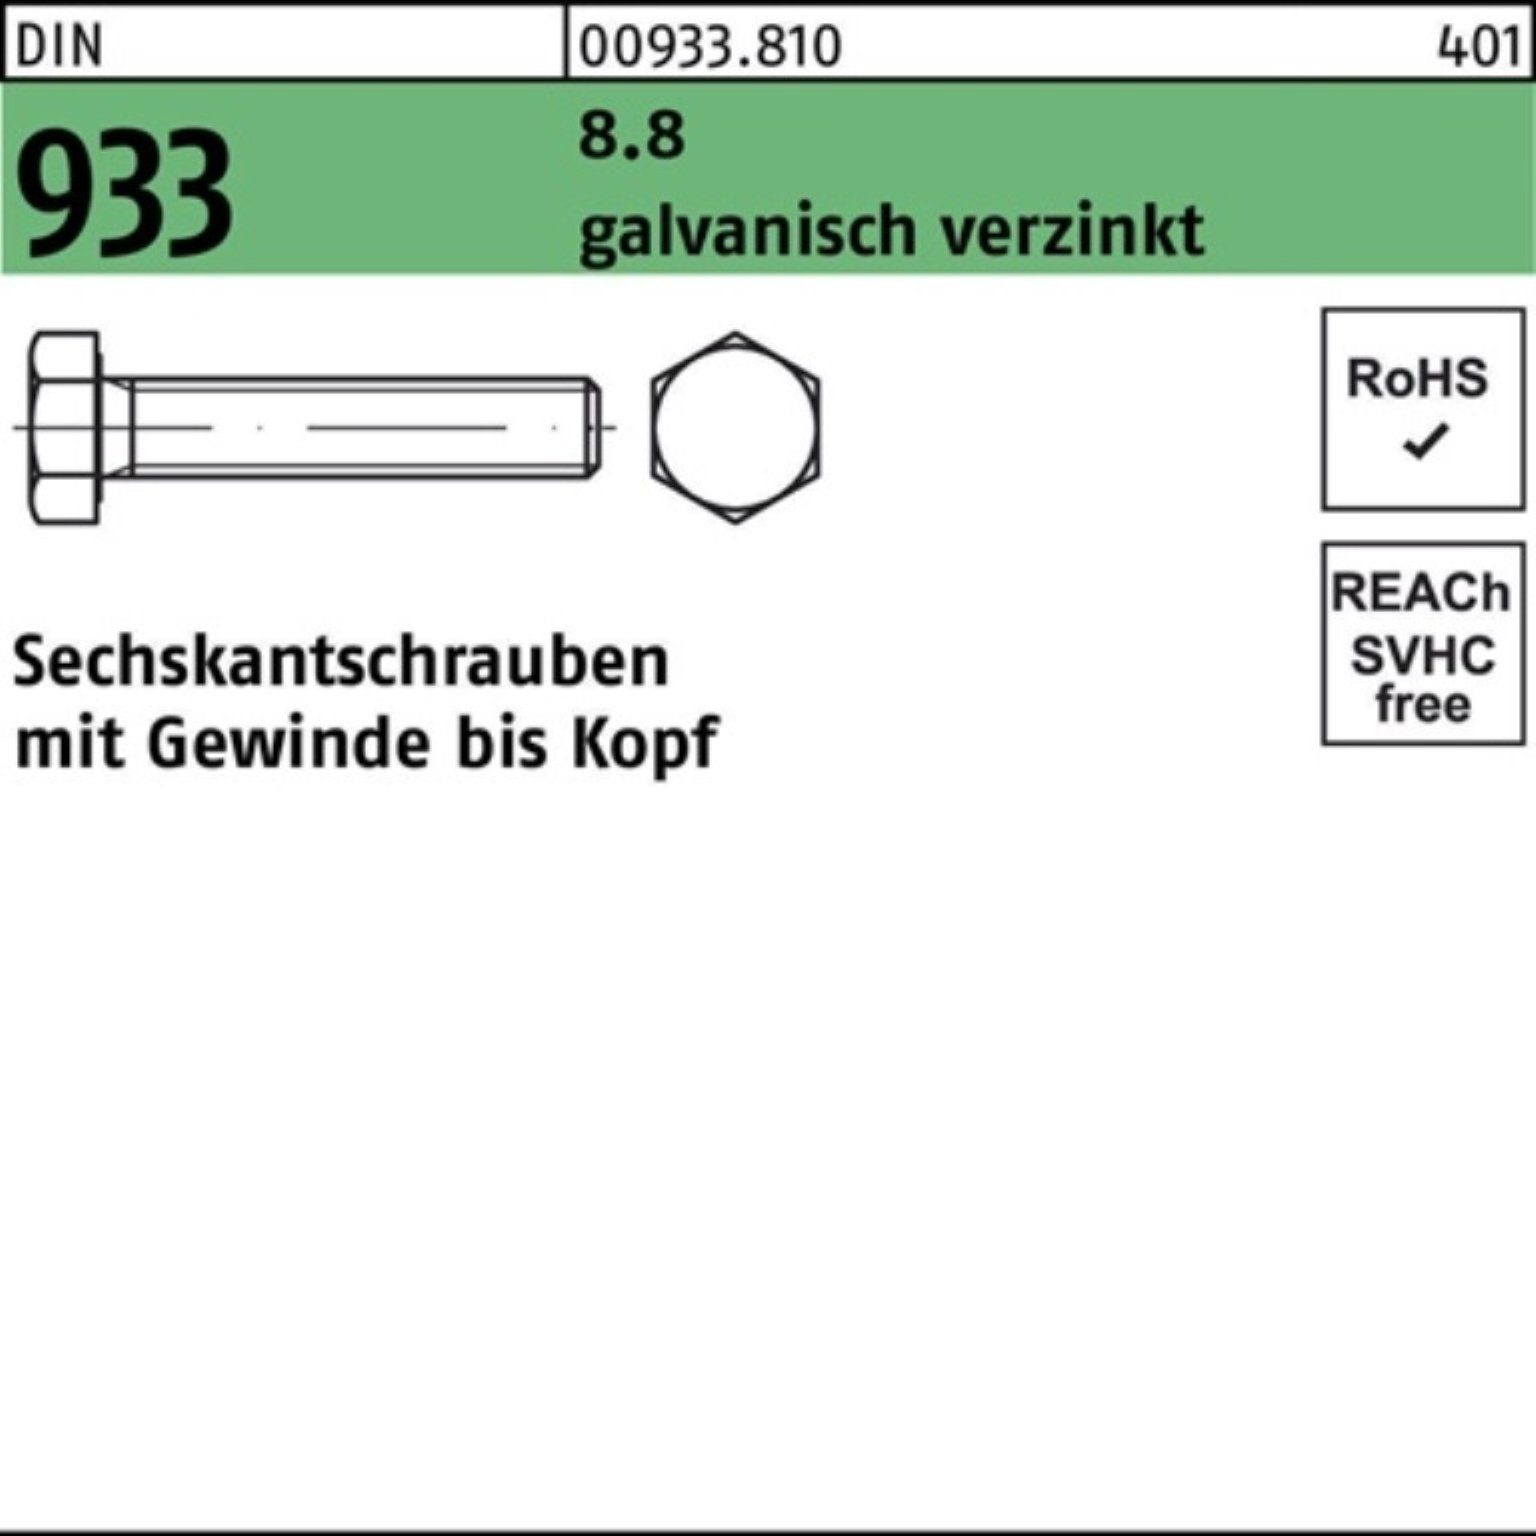 Reyher Sechskantschraube 100er DIN 70 Stüc 1 M33x VG galv.verz. 933 8.8 Sechskantschraube Pack